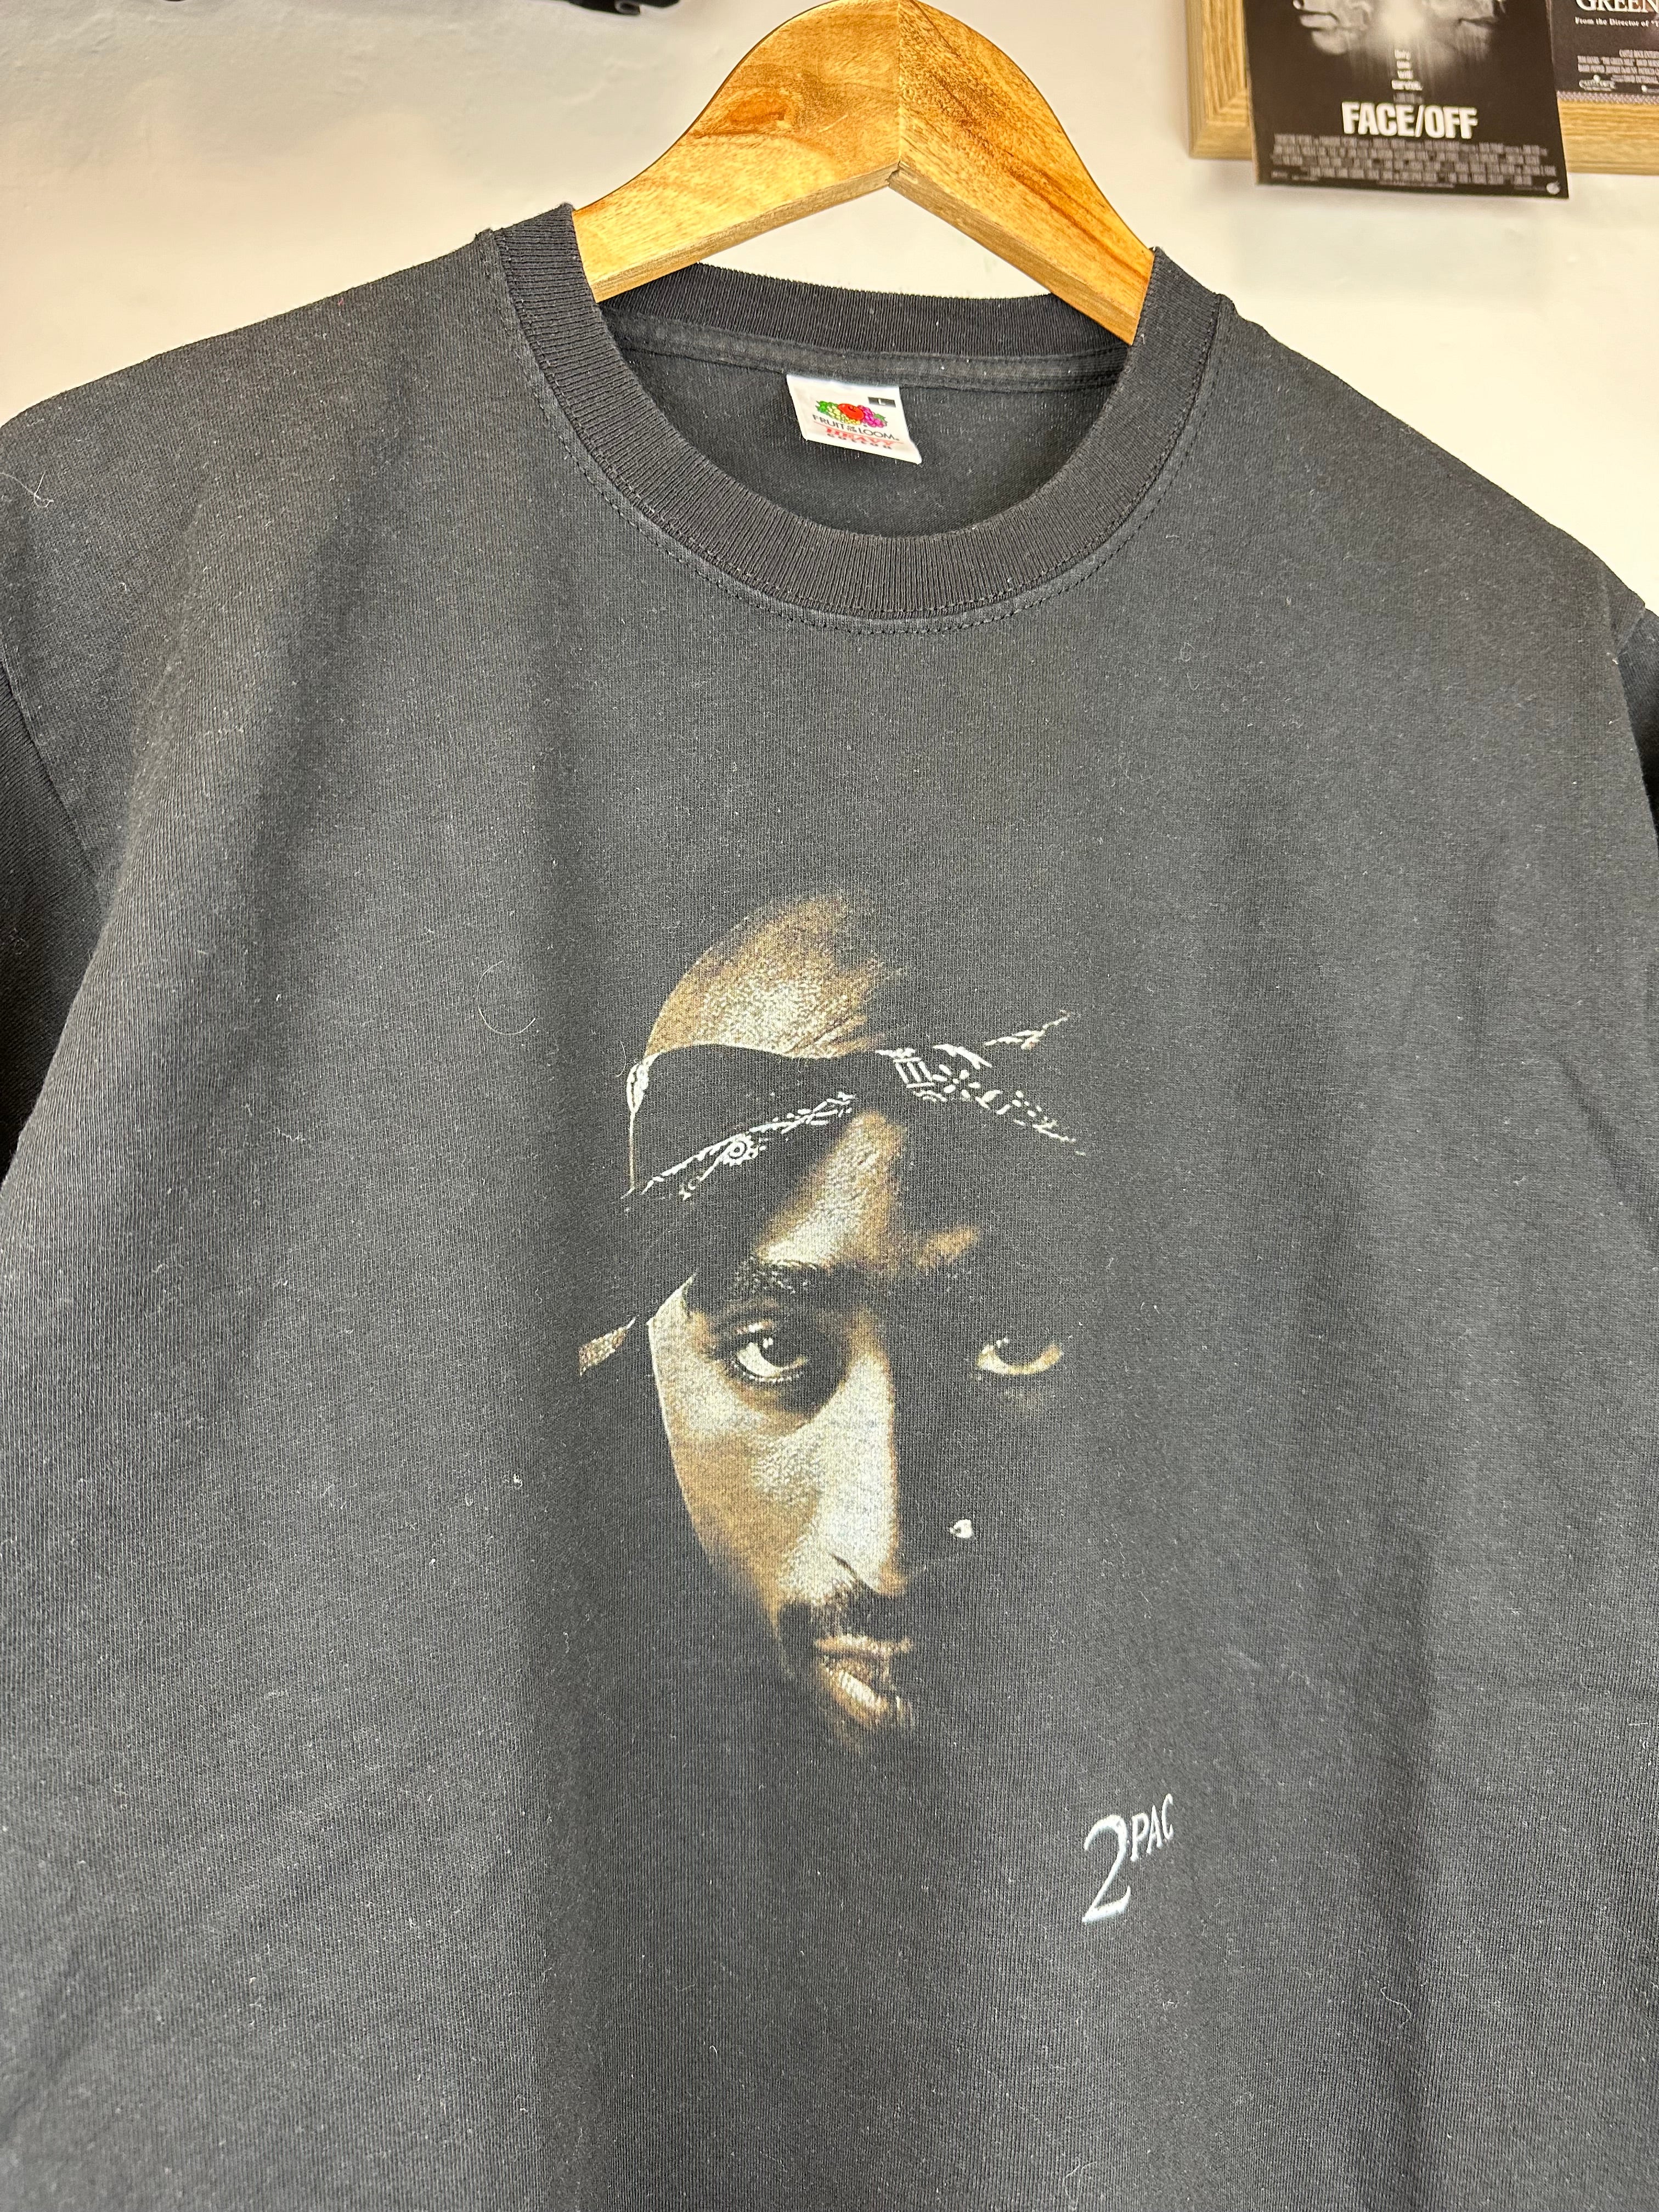 Vintage Tupac Shakur t-shirt - size L